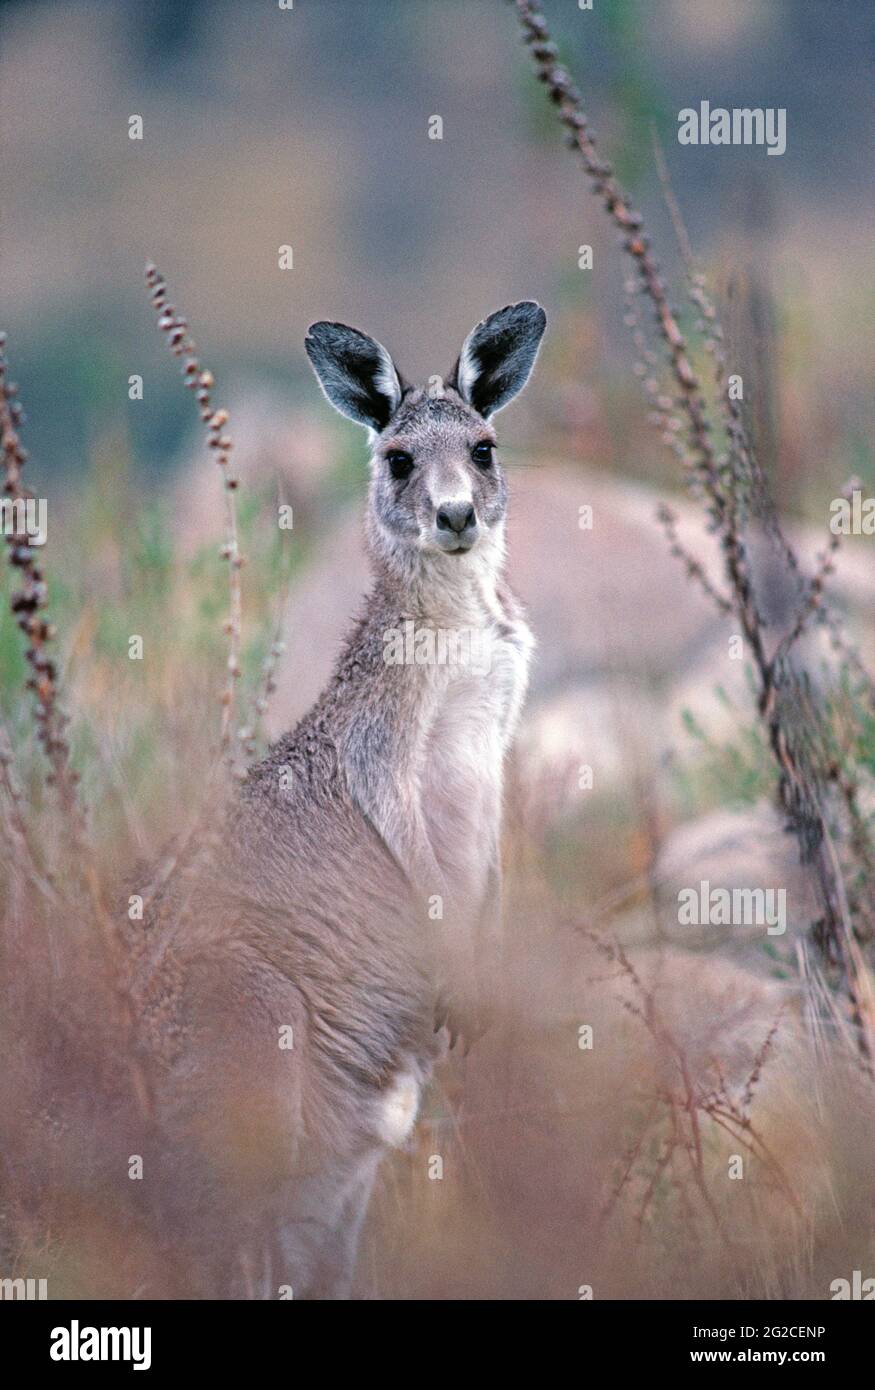 Australia. Vida salvaje. Marsupial. Canguro gris en el paisaje. Macropus giganteus. Foto de stock